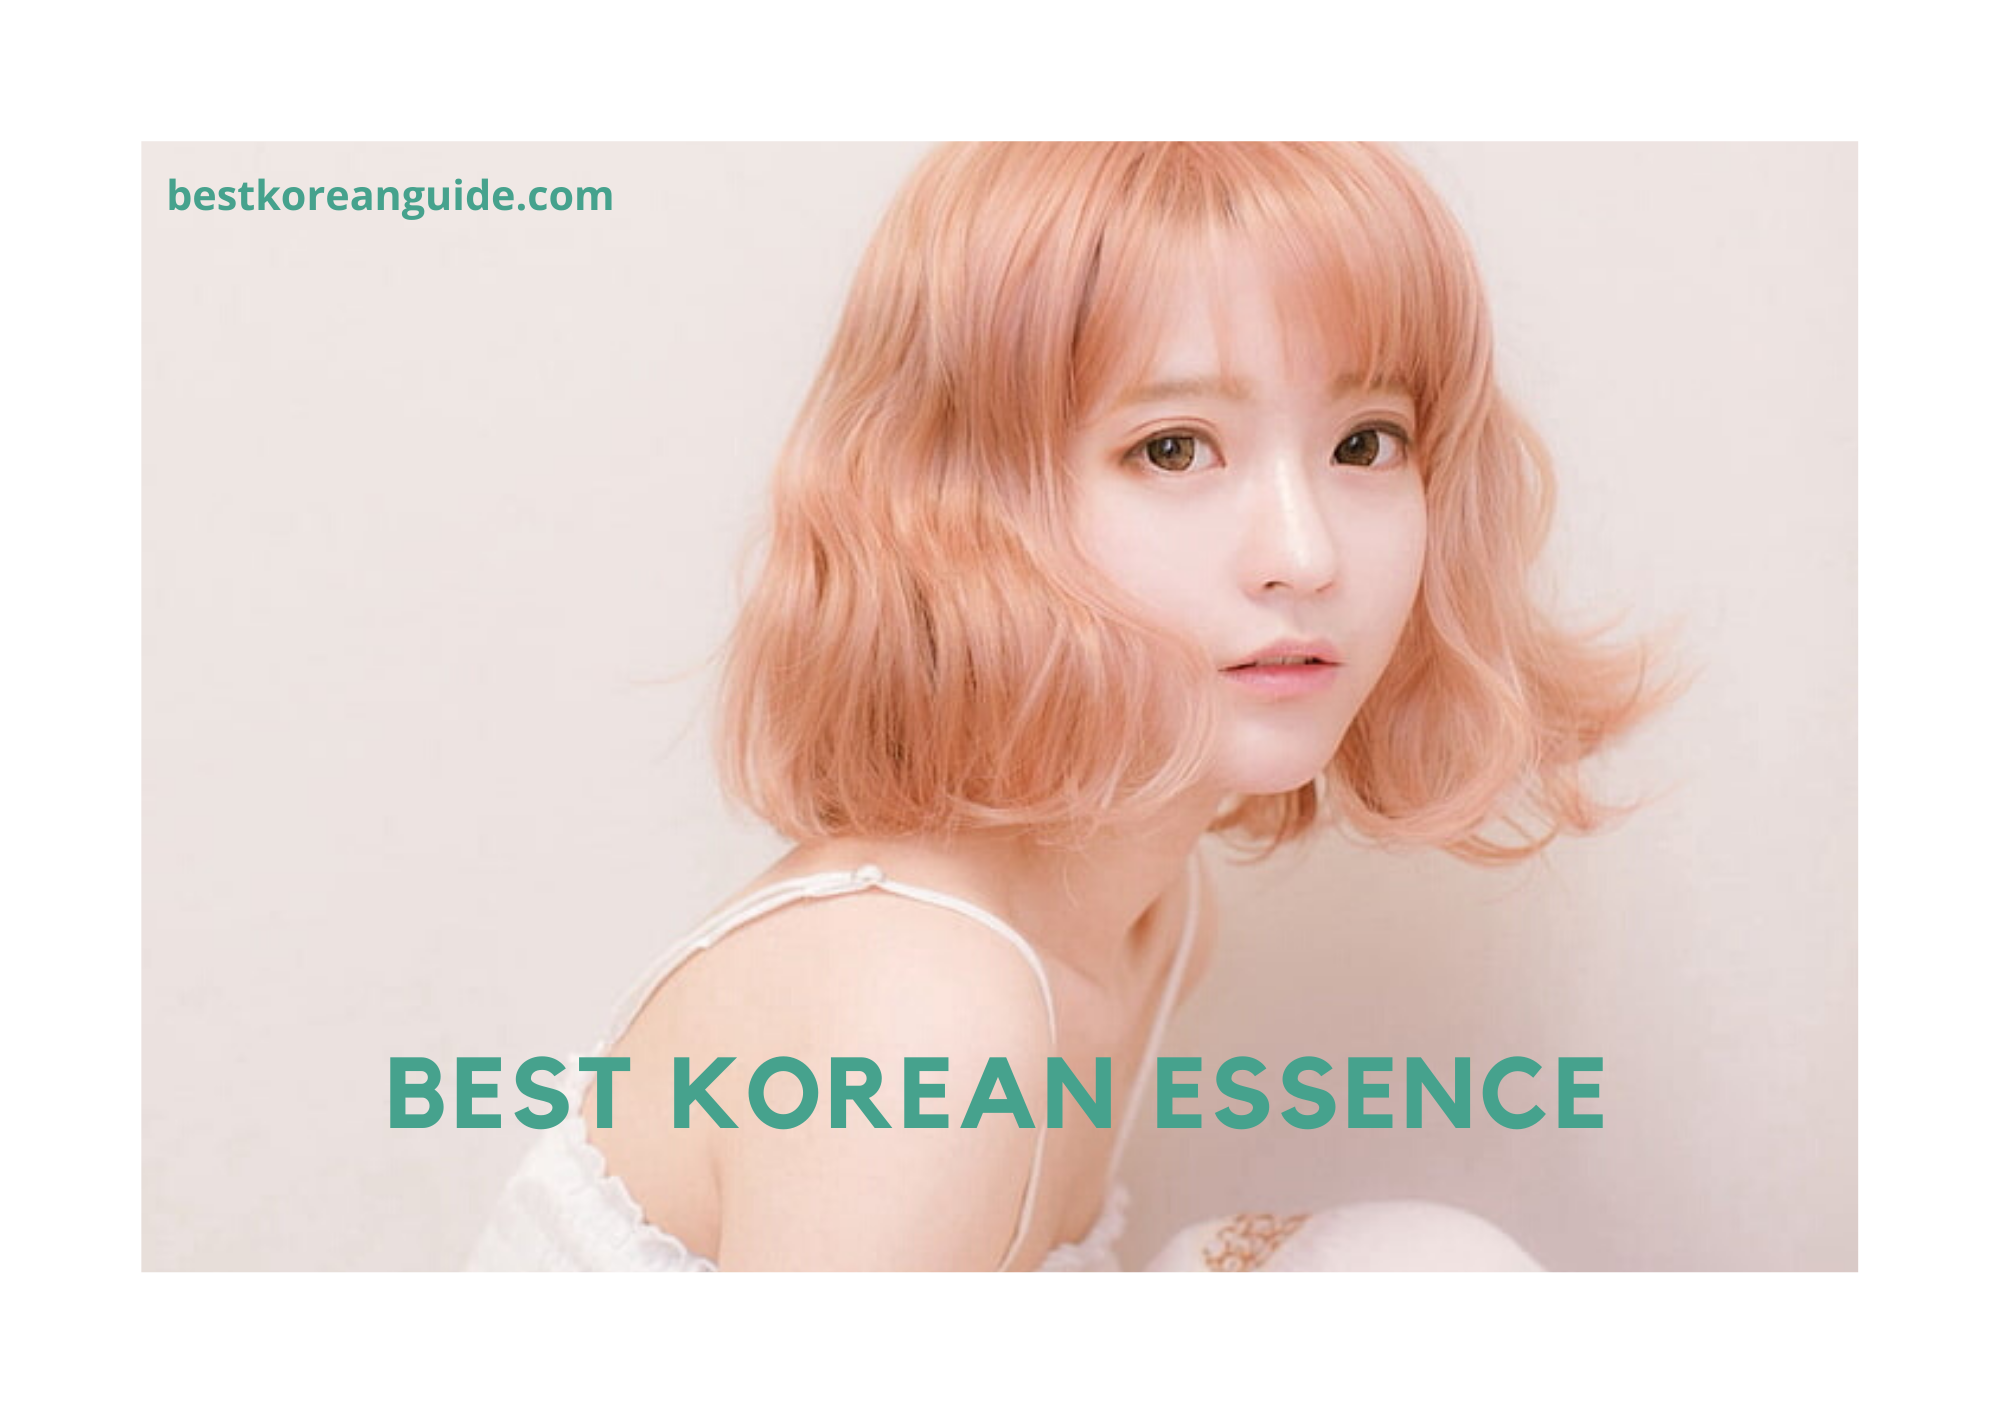 How to use Korean skin essence?